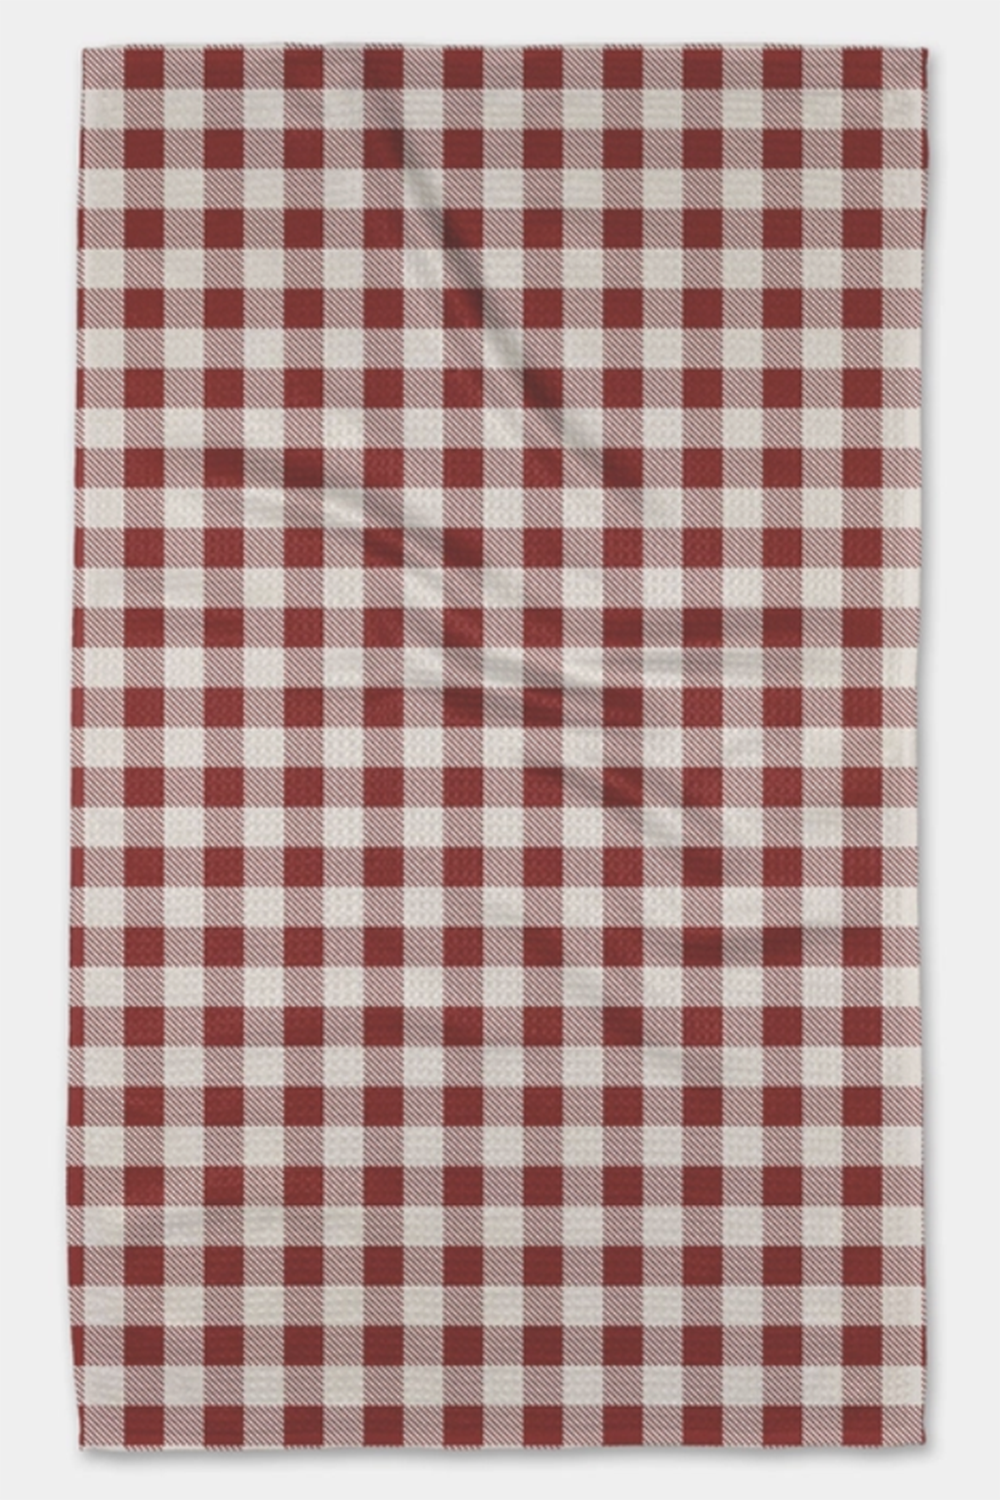 Geometry Kitchen Tea Towel - Winter Gingham Red